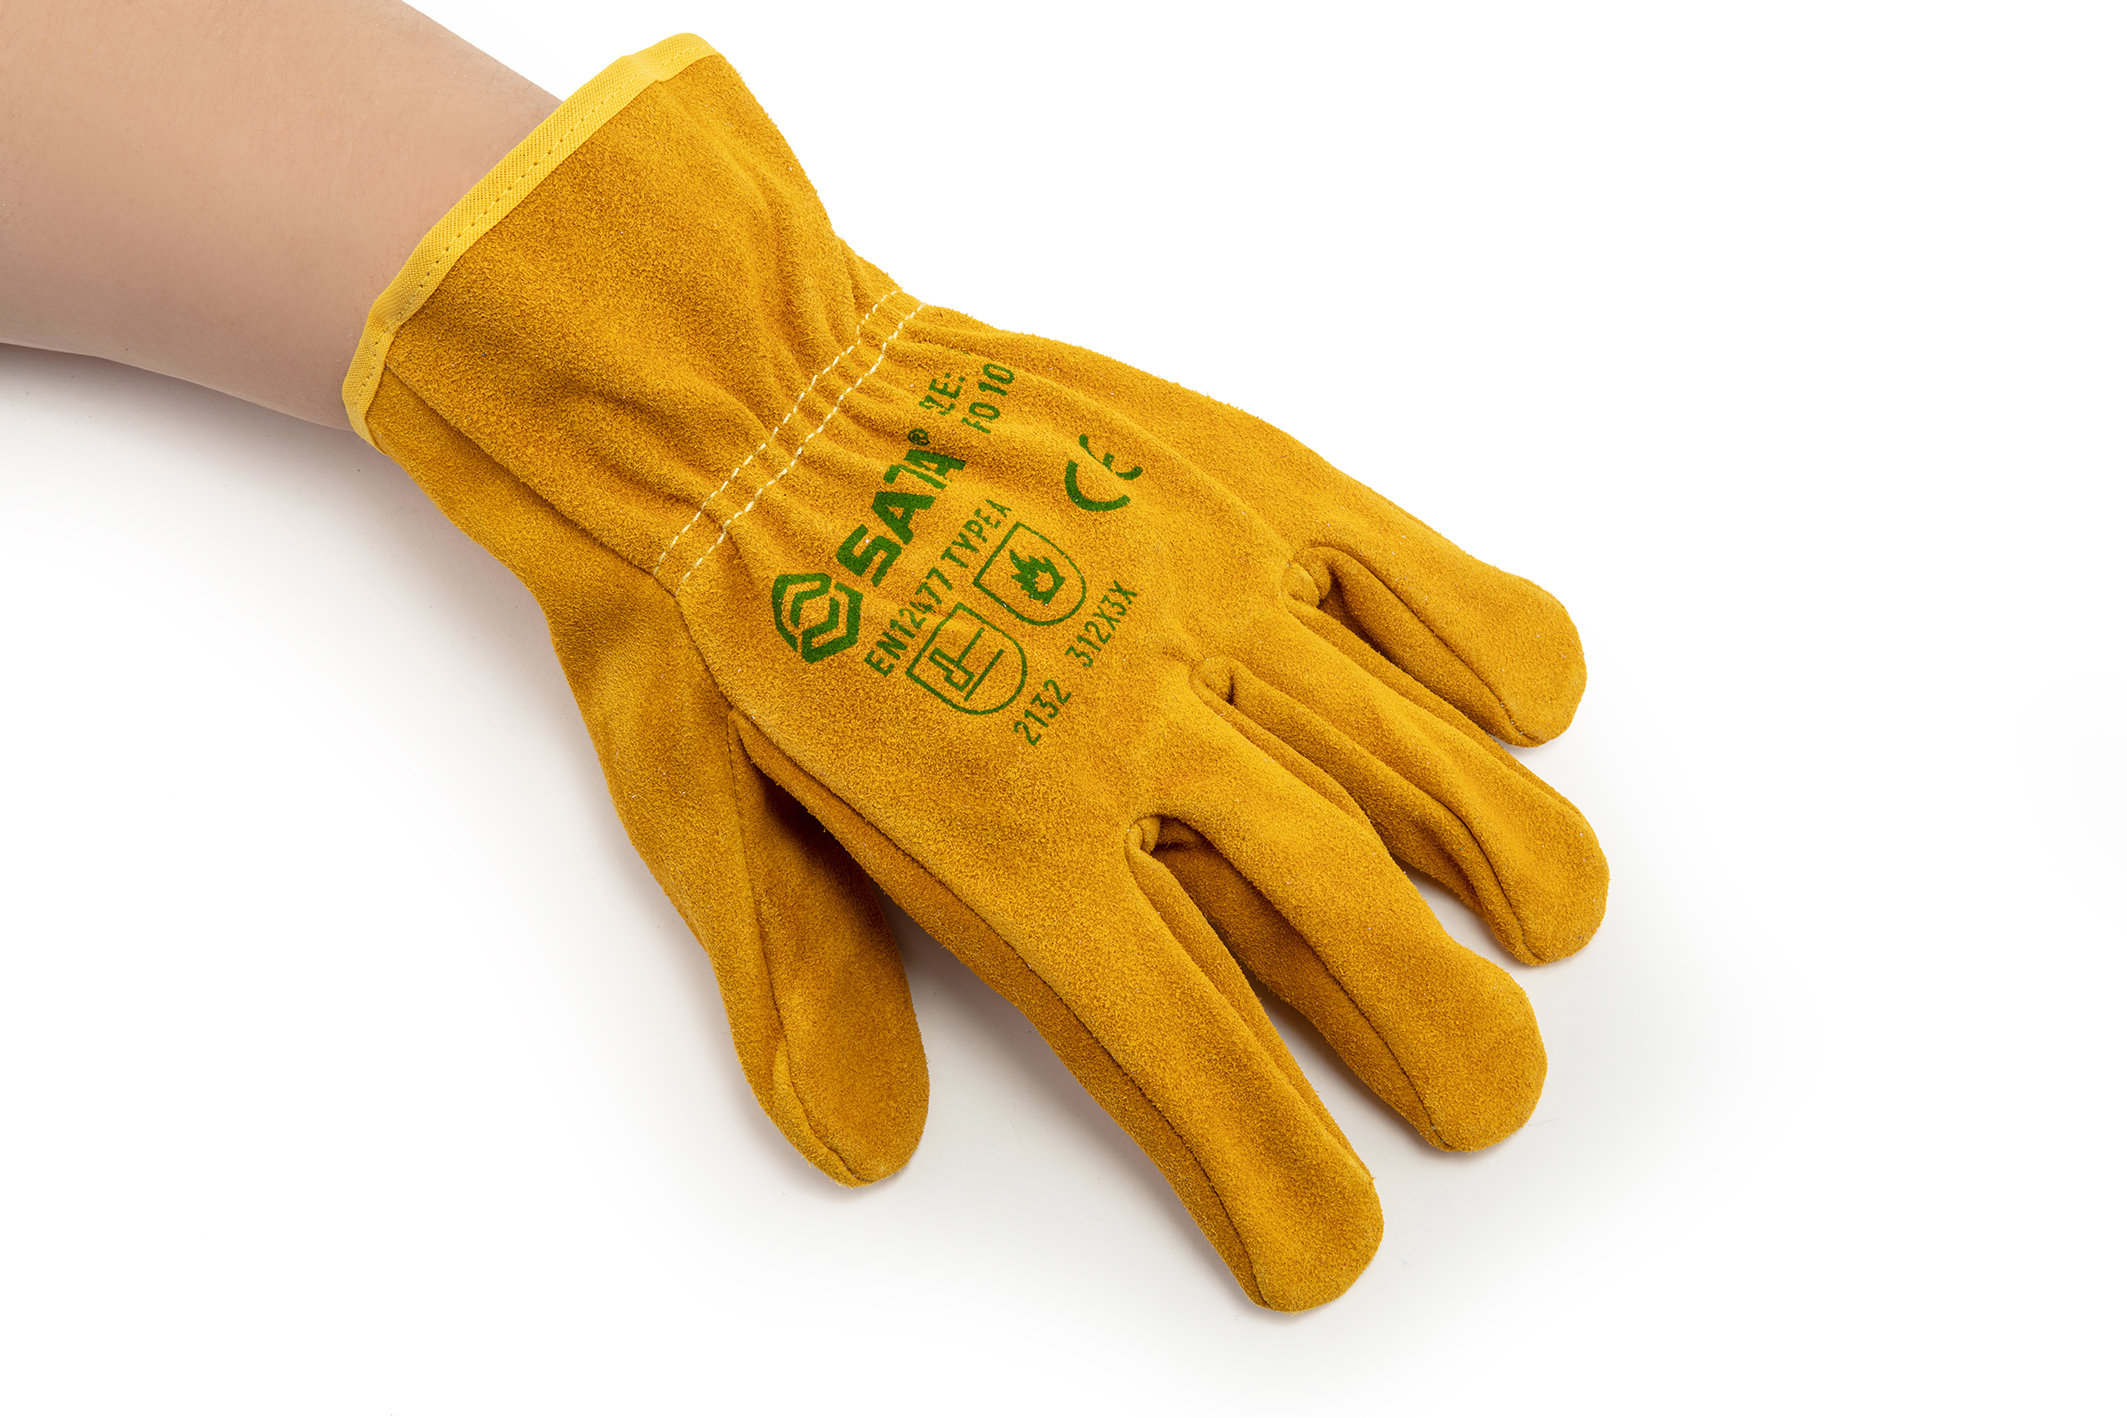 SATA Safety Gloves